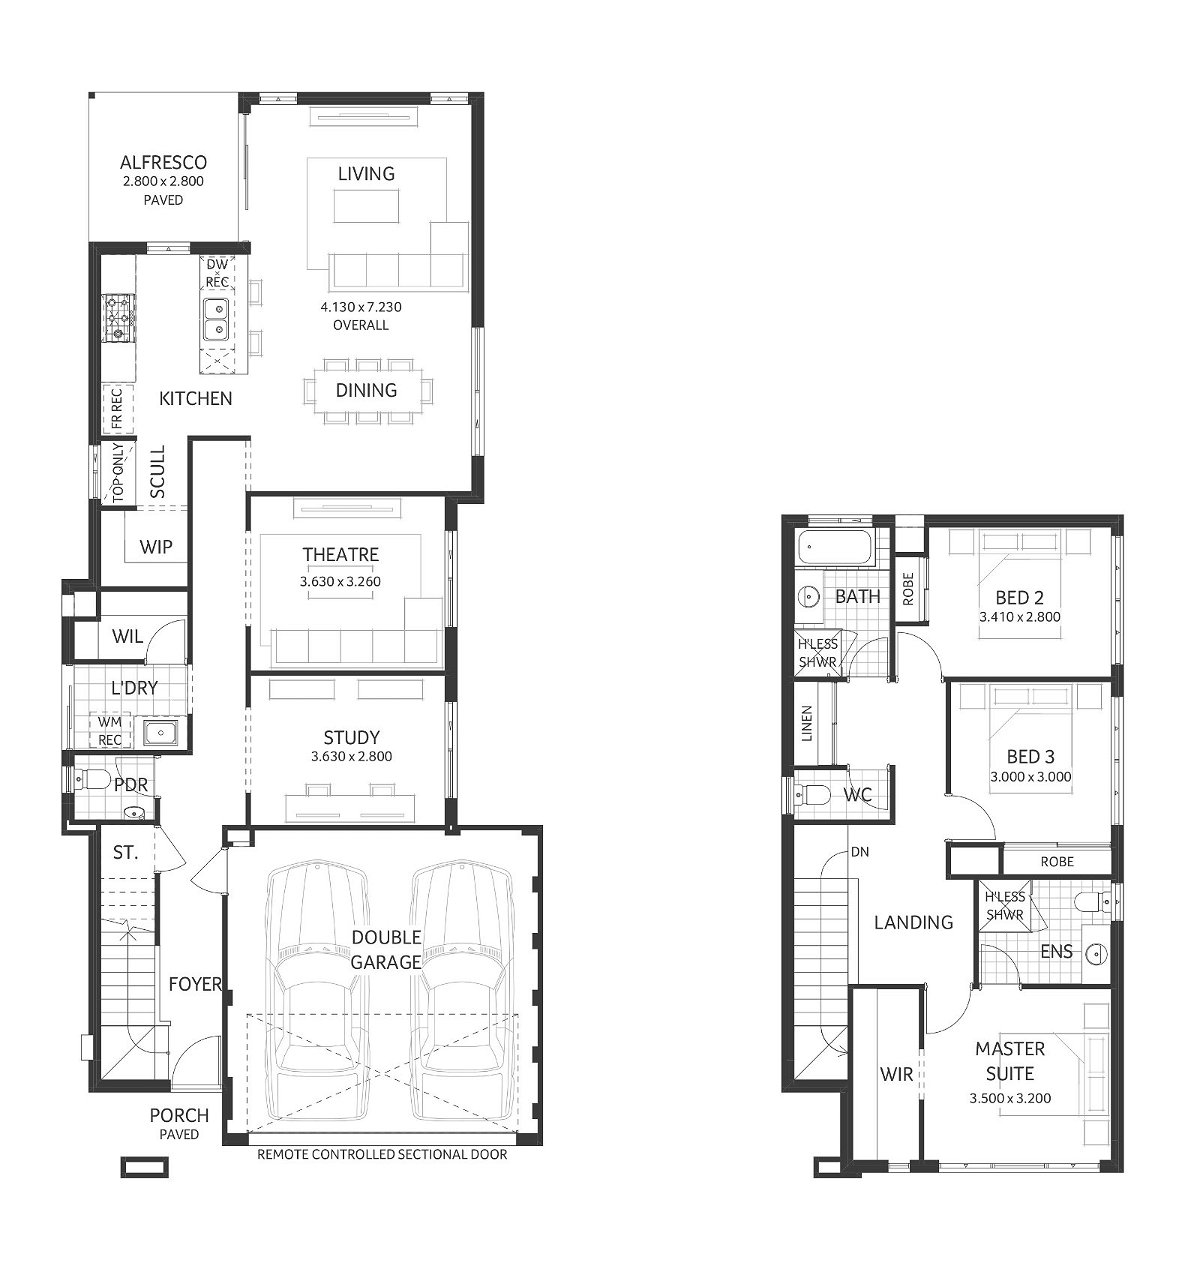 Plunkett Homes - Grantham | Lifestyle - Floorplan - Grantham Lifestyle Contemporary Marketing Plan